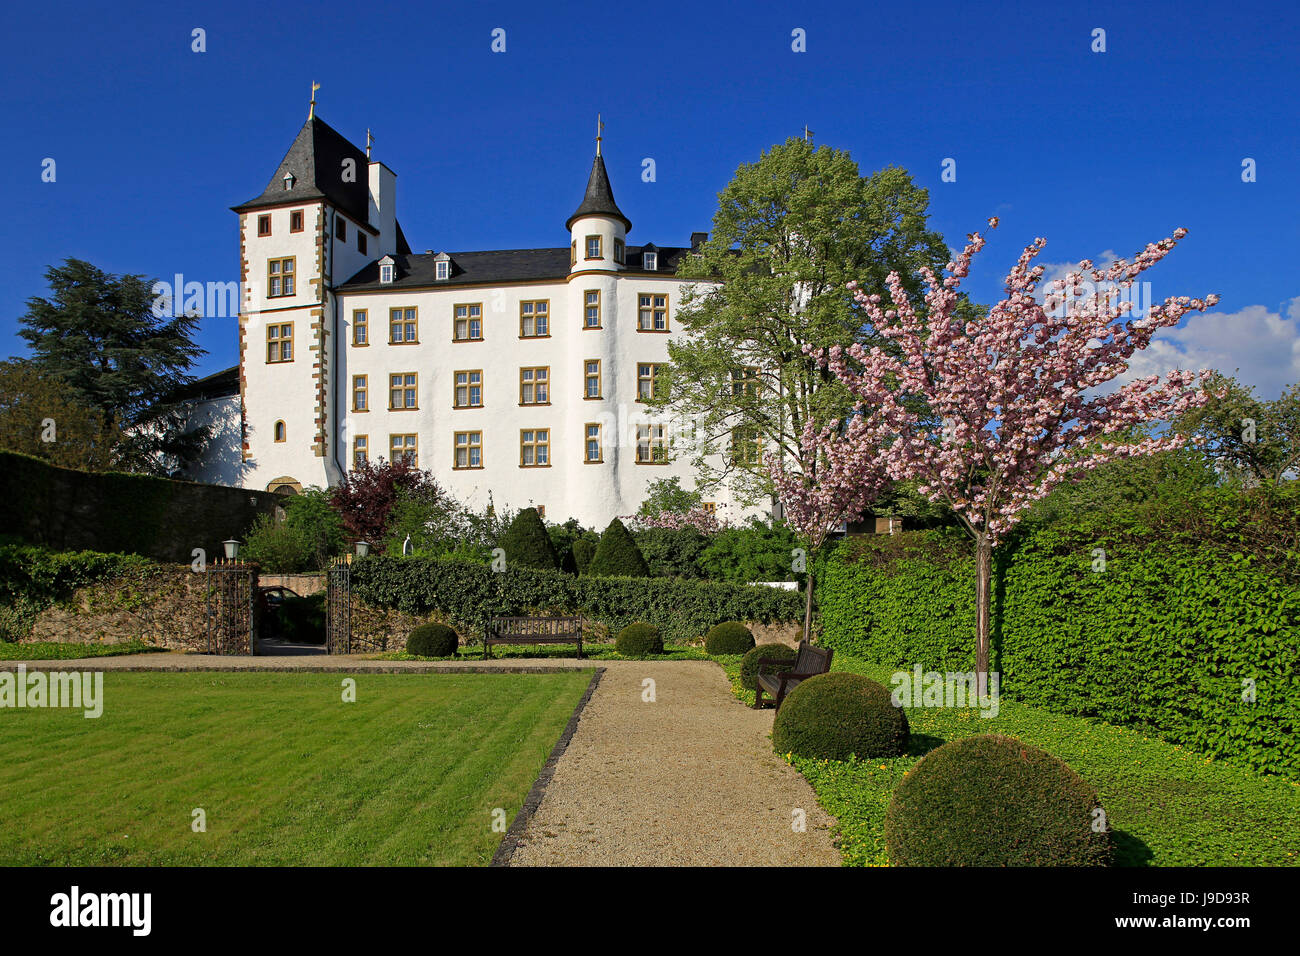 Victor's Residenz Hotel Schloss Berg, Nennig nella parte superiore del fiume Moselle, Saarland, Germania, Europa Foto Stock